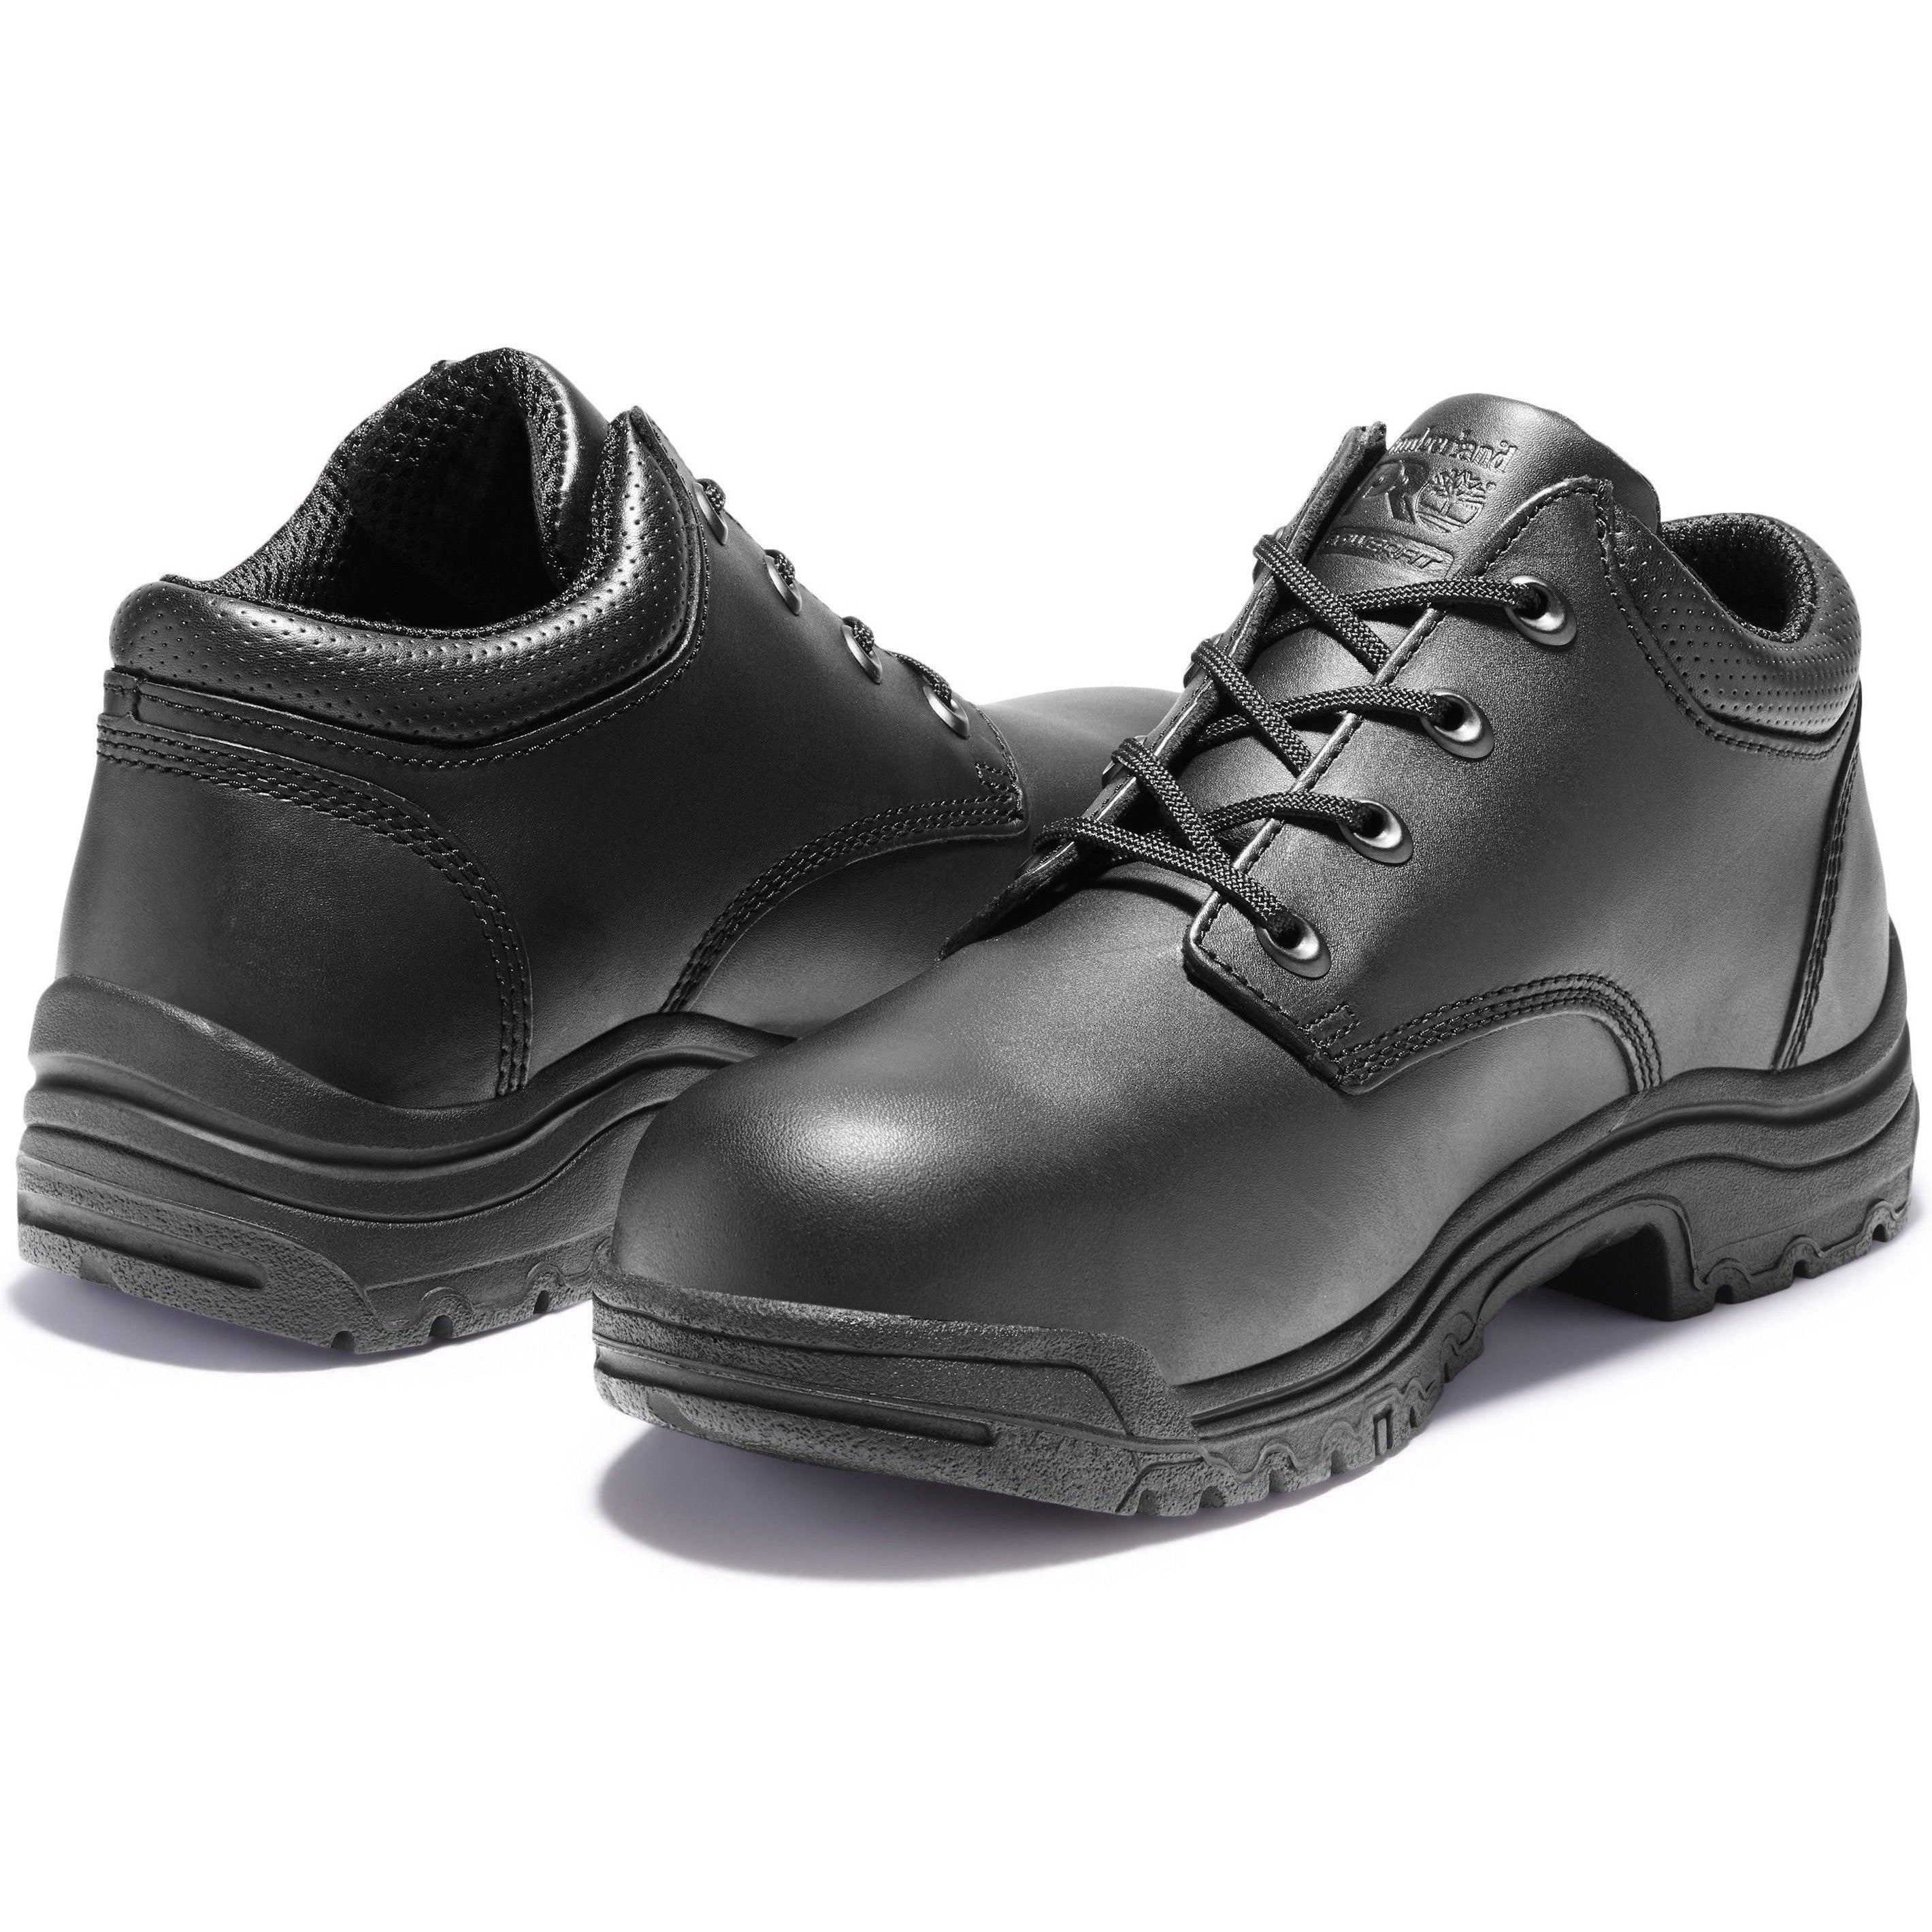 Timberland PRO Men's TiTAN Oxford Alloy Toe Work Shoe Black TB040044001